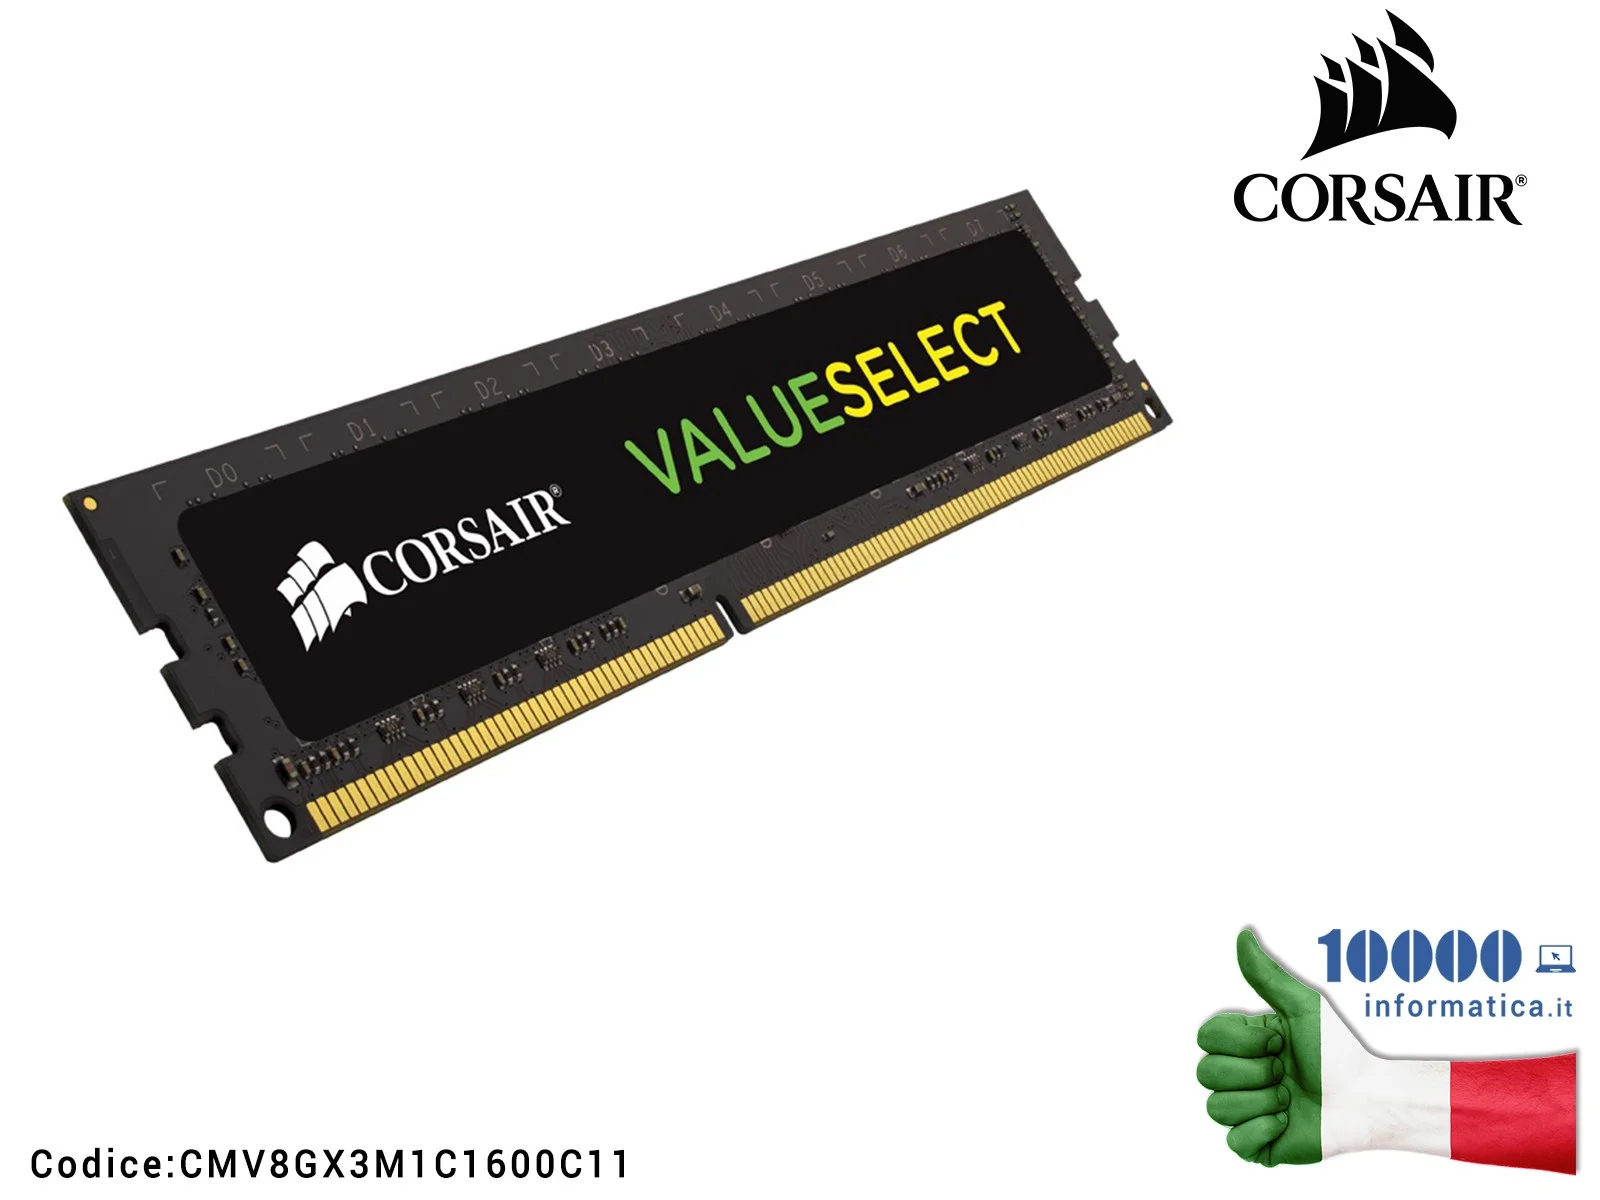 CMV8GX3M1C1600C11 Corsair 8GB DDR3L 1600MHz DIMM